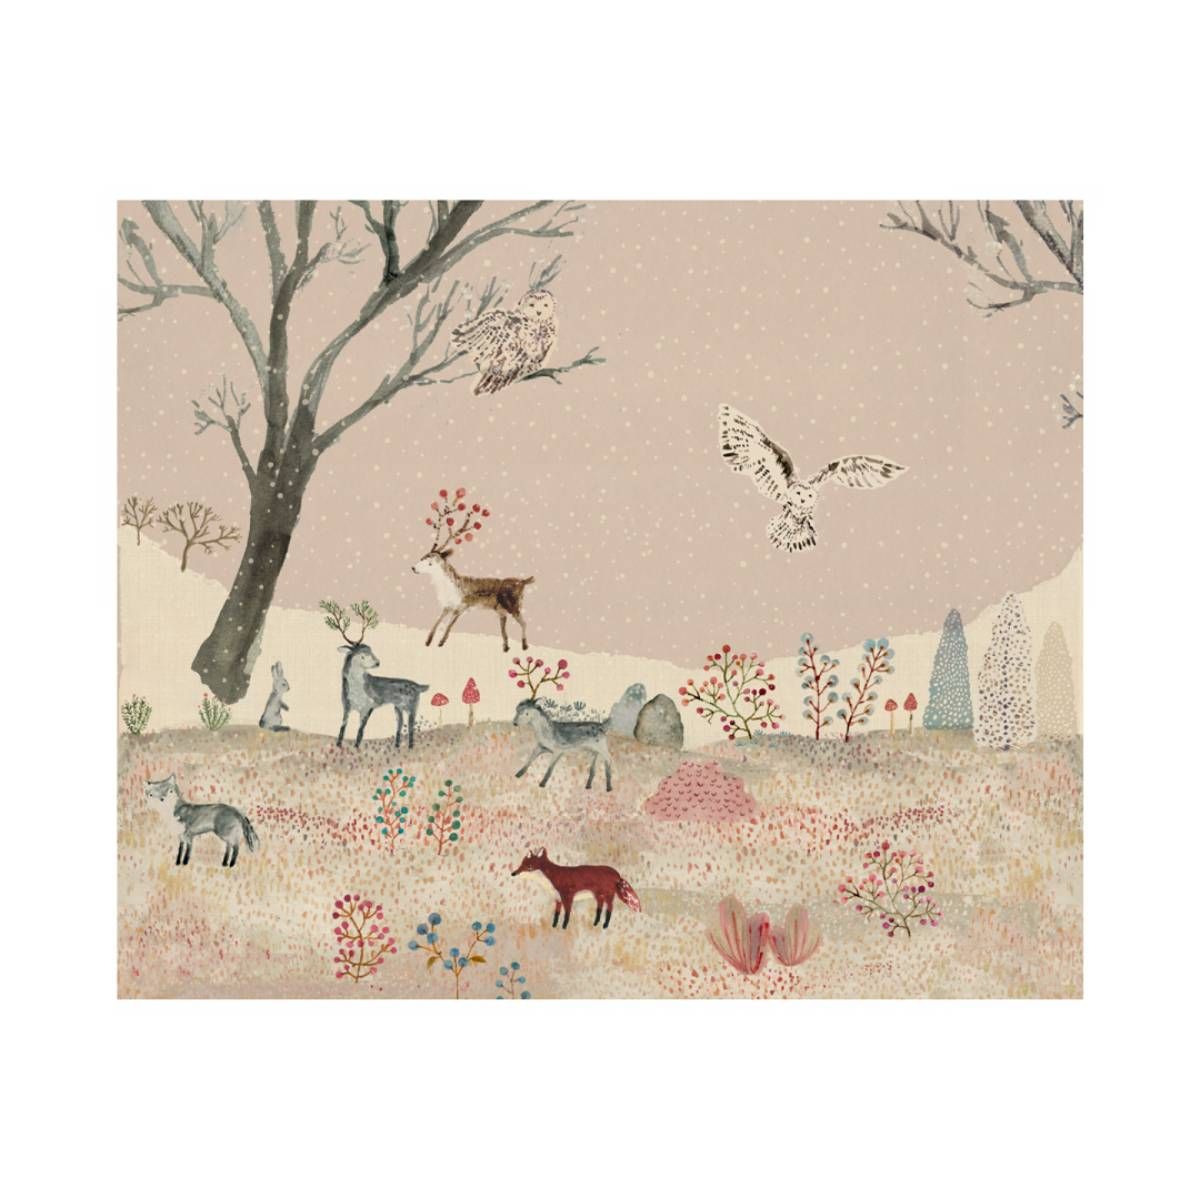 Maileg Gavepapir Winter wonderland med sneugle, rensdyr og en ræv